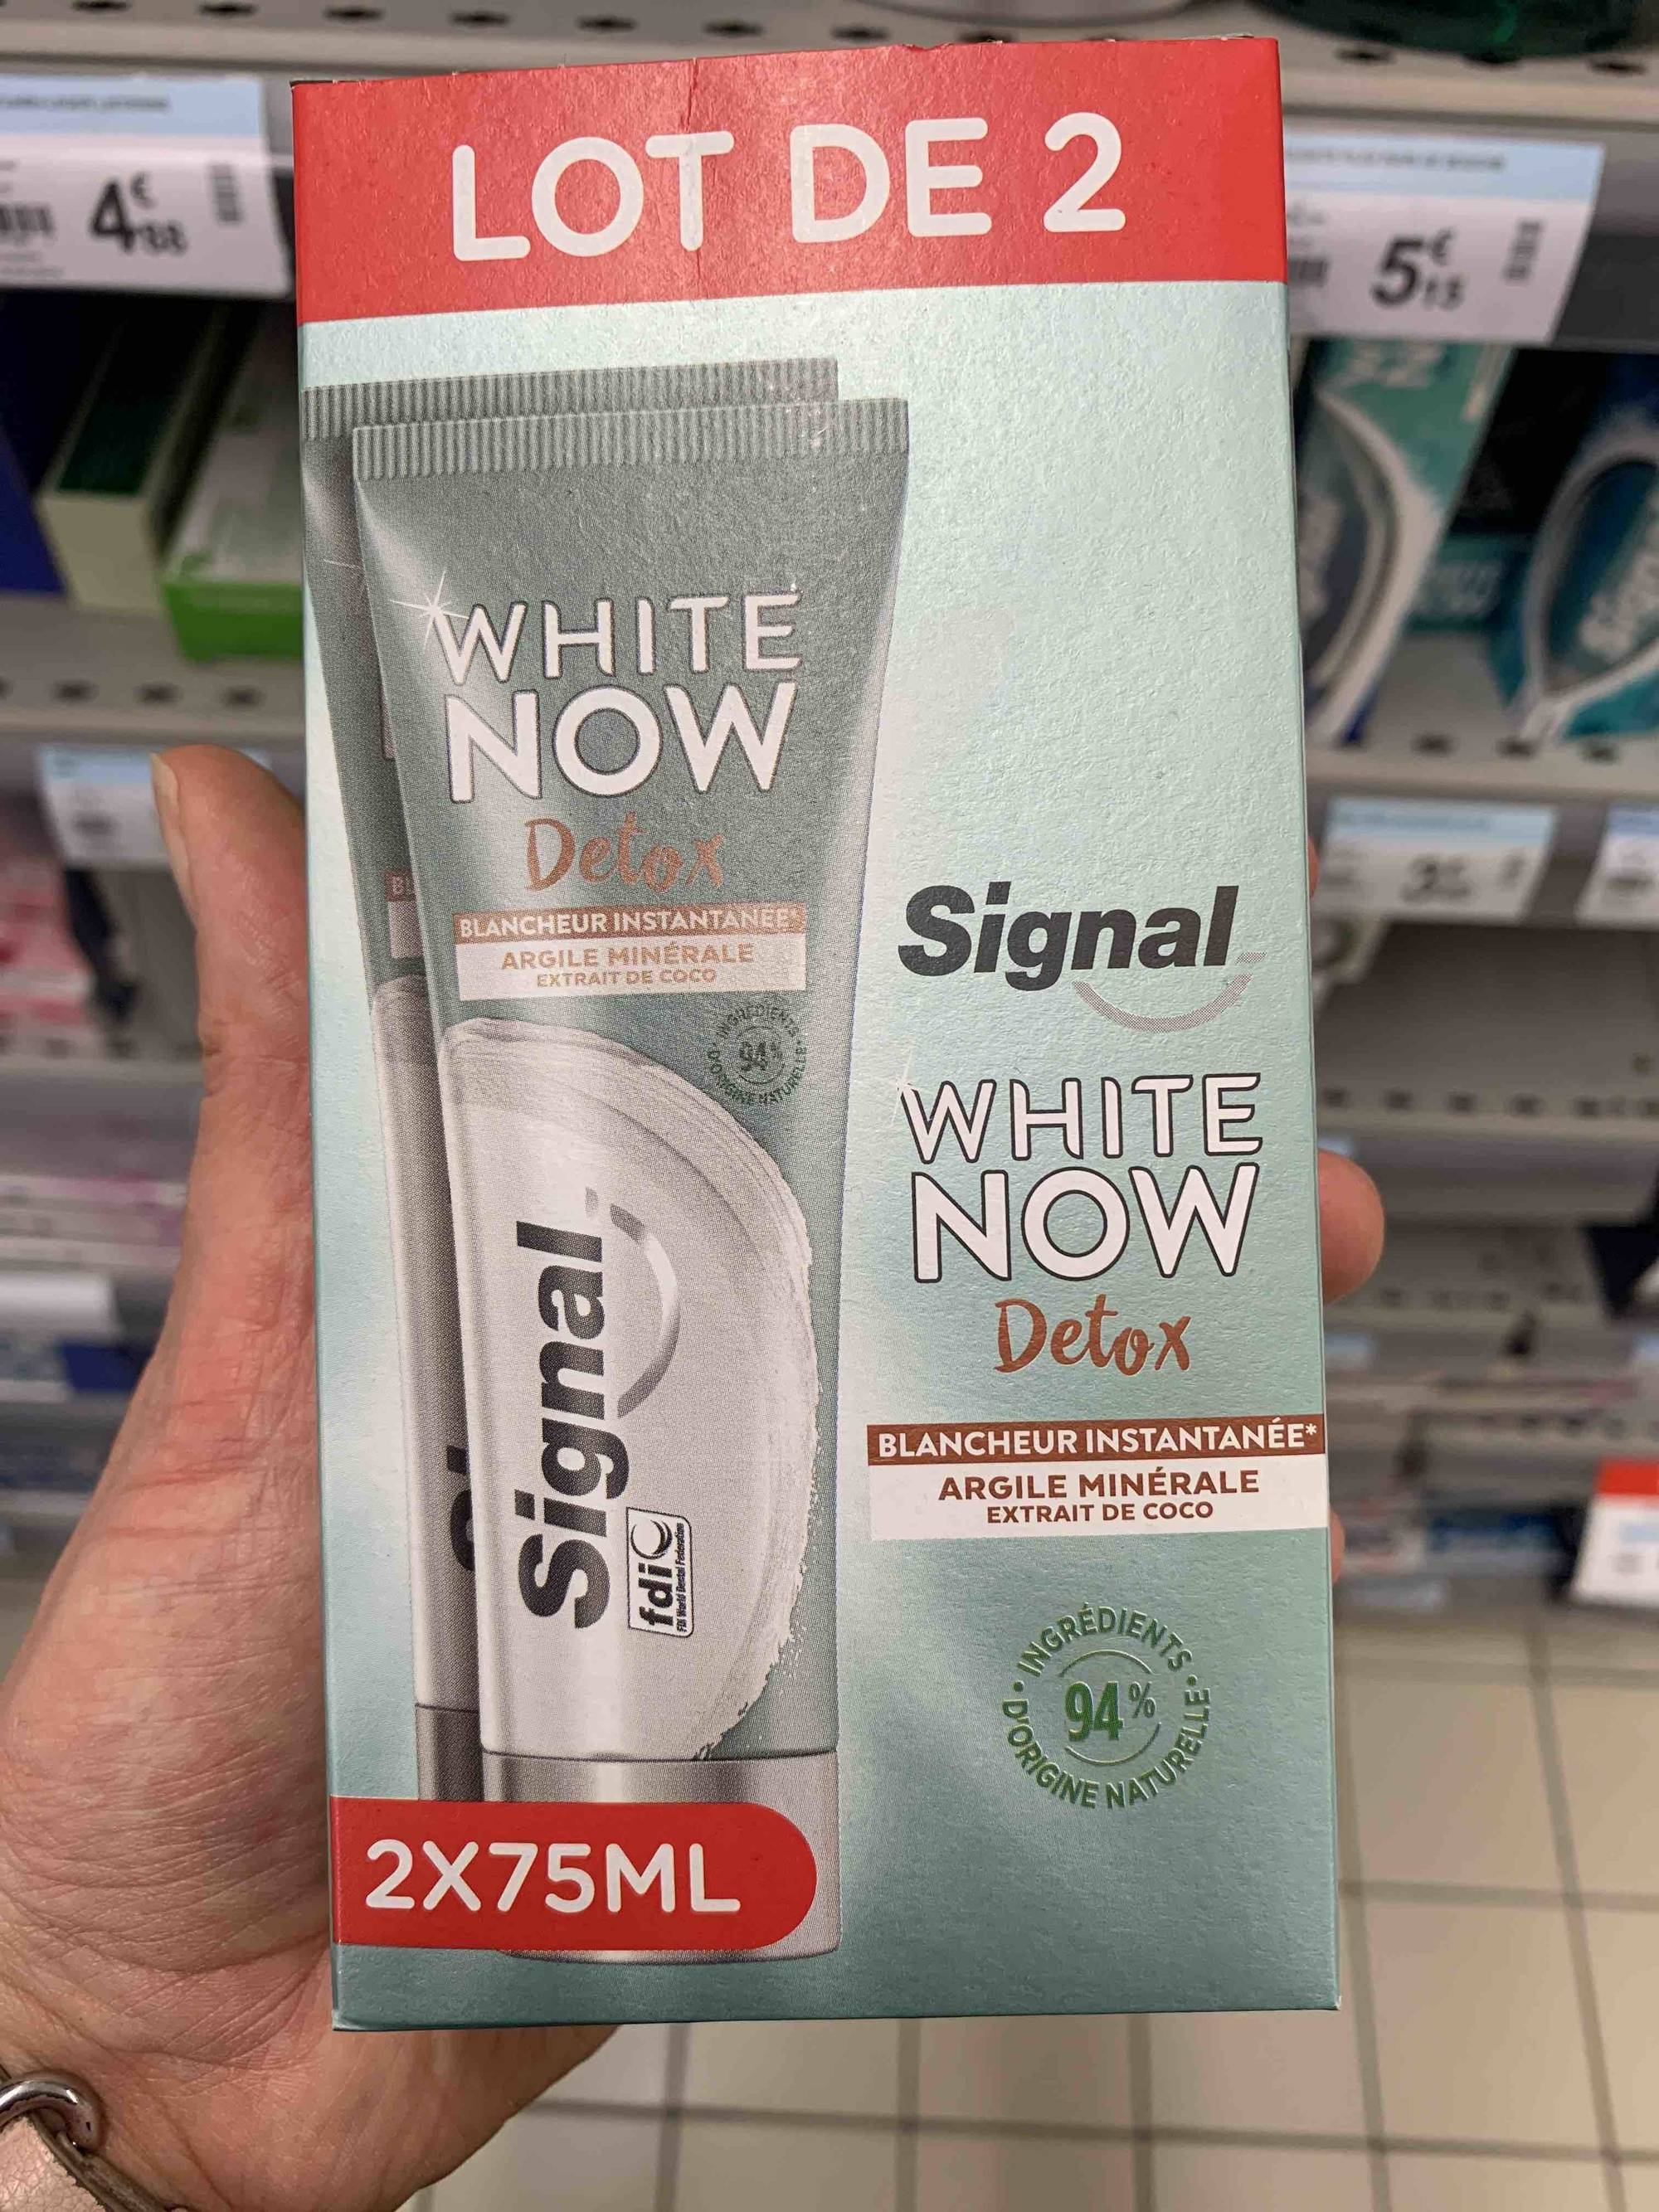 SIGNAL - White now detox - Dentifrice blancheur instantanée